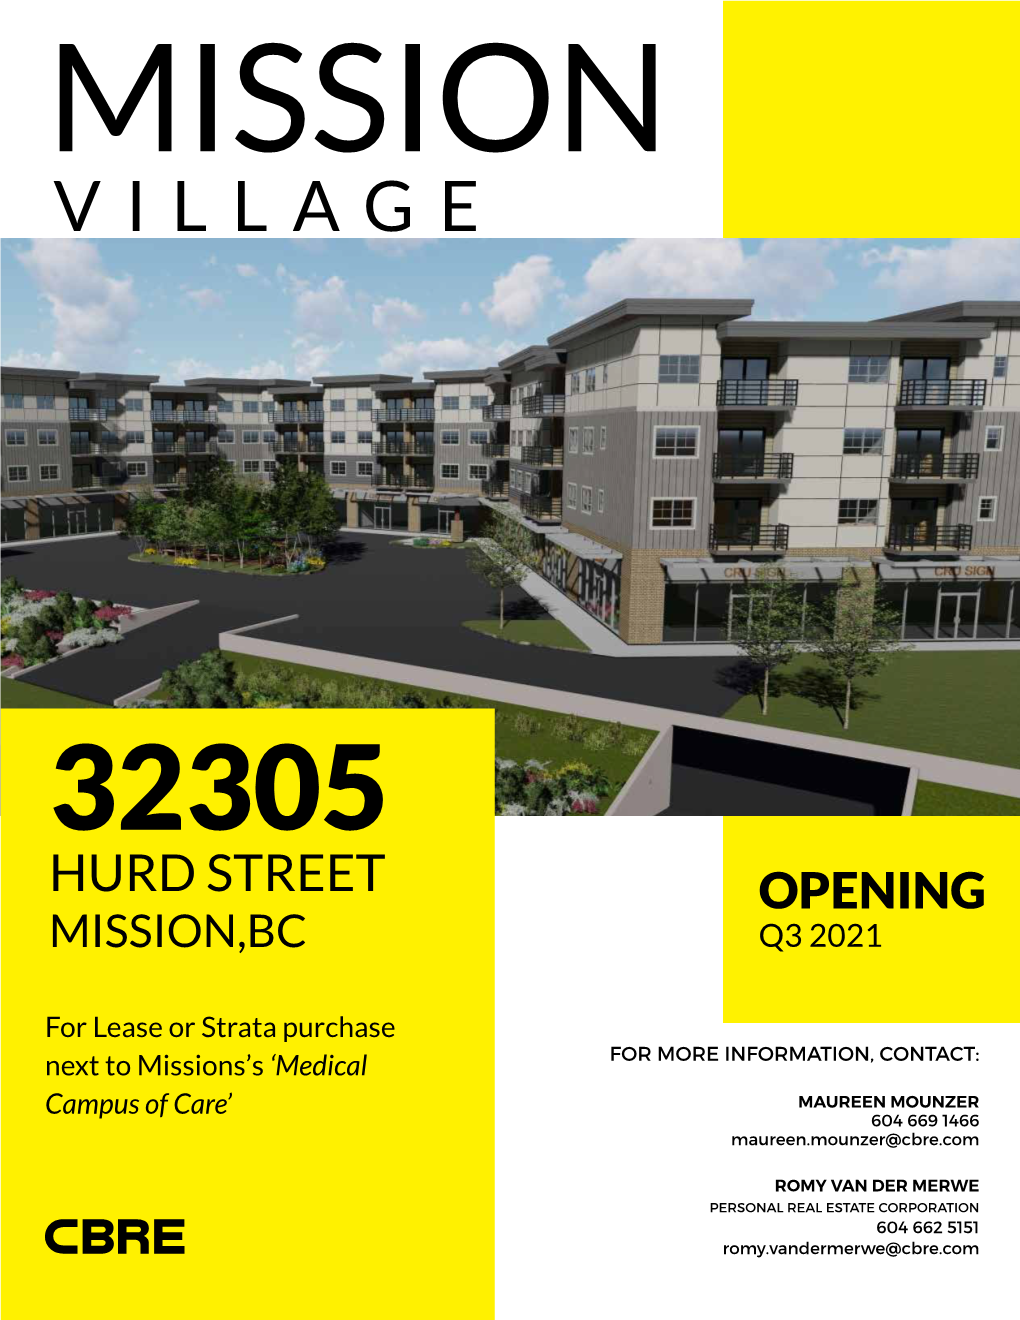 Mission Village Brochurepdf